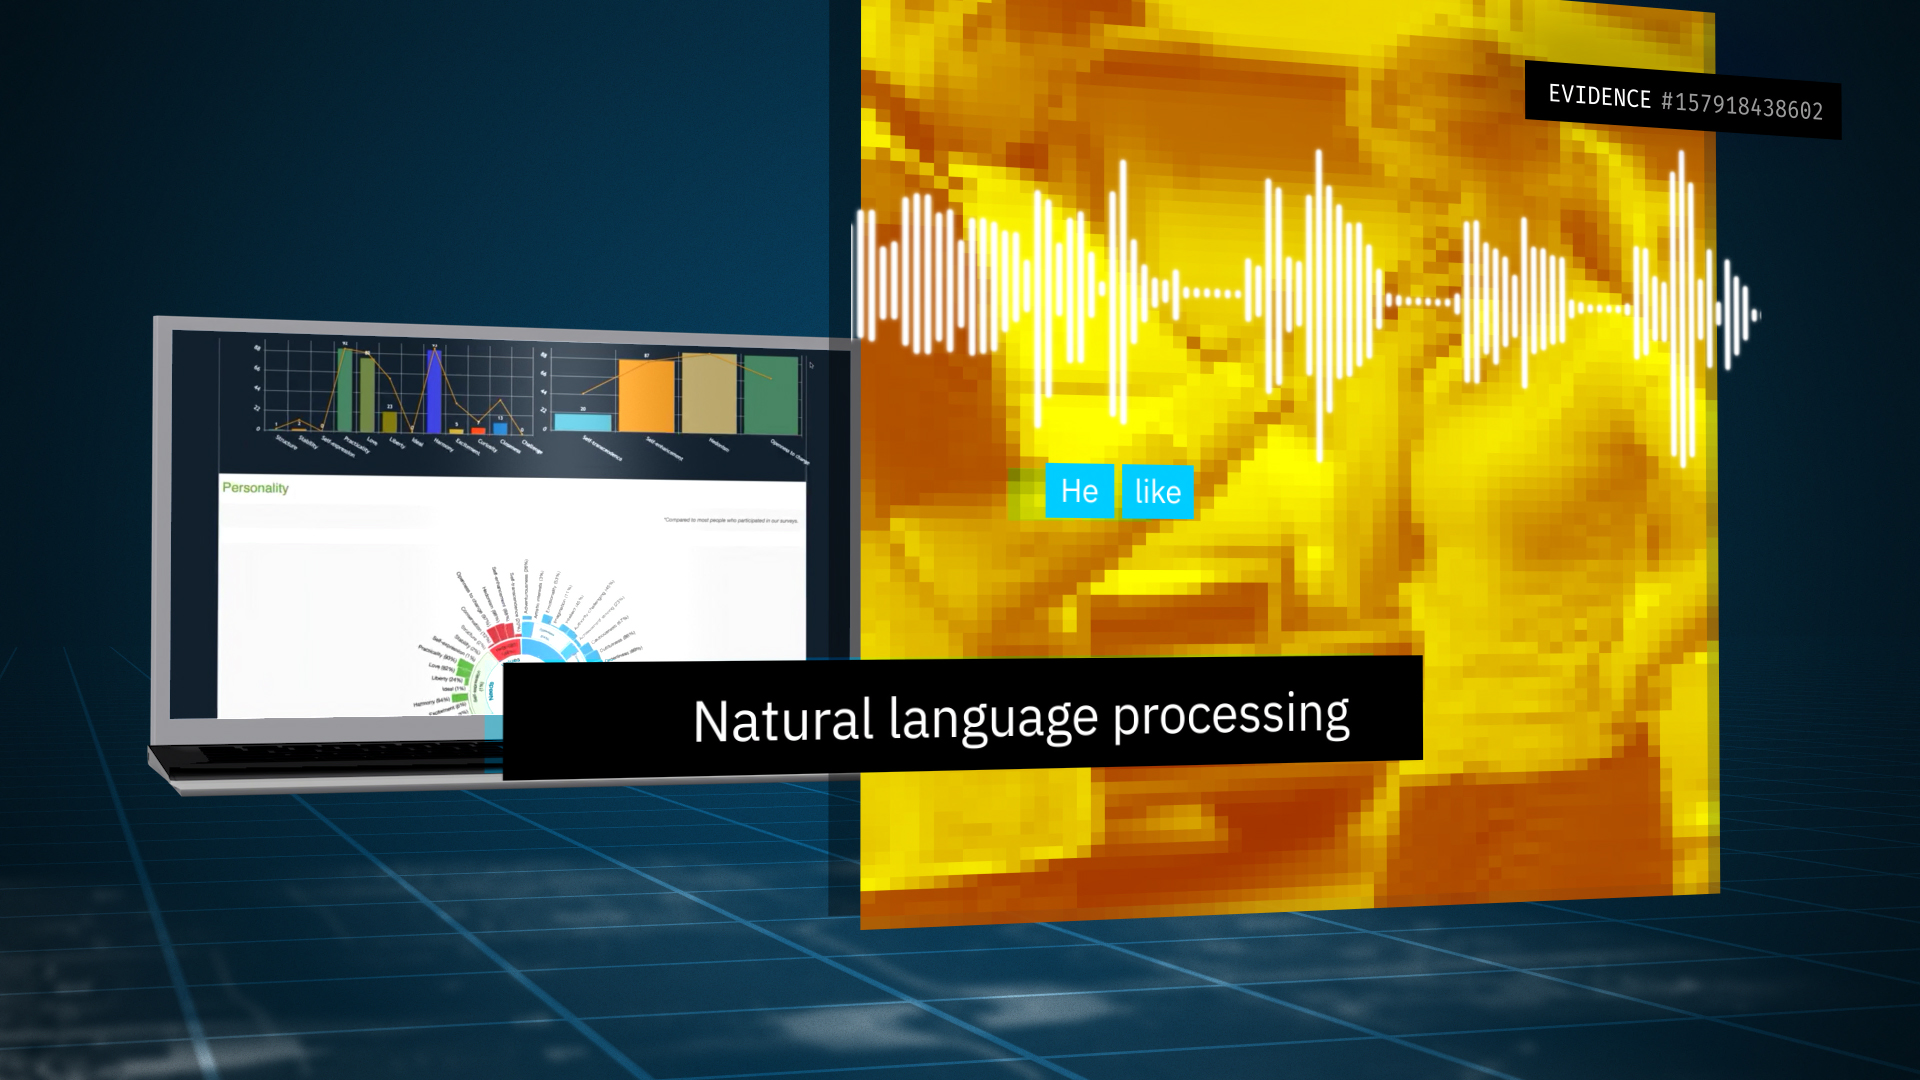 Managing Digital Evidence with IBM. Natural Language Processing.